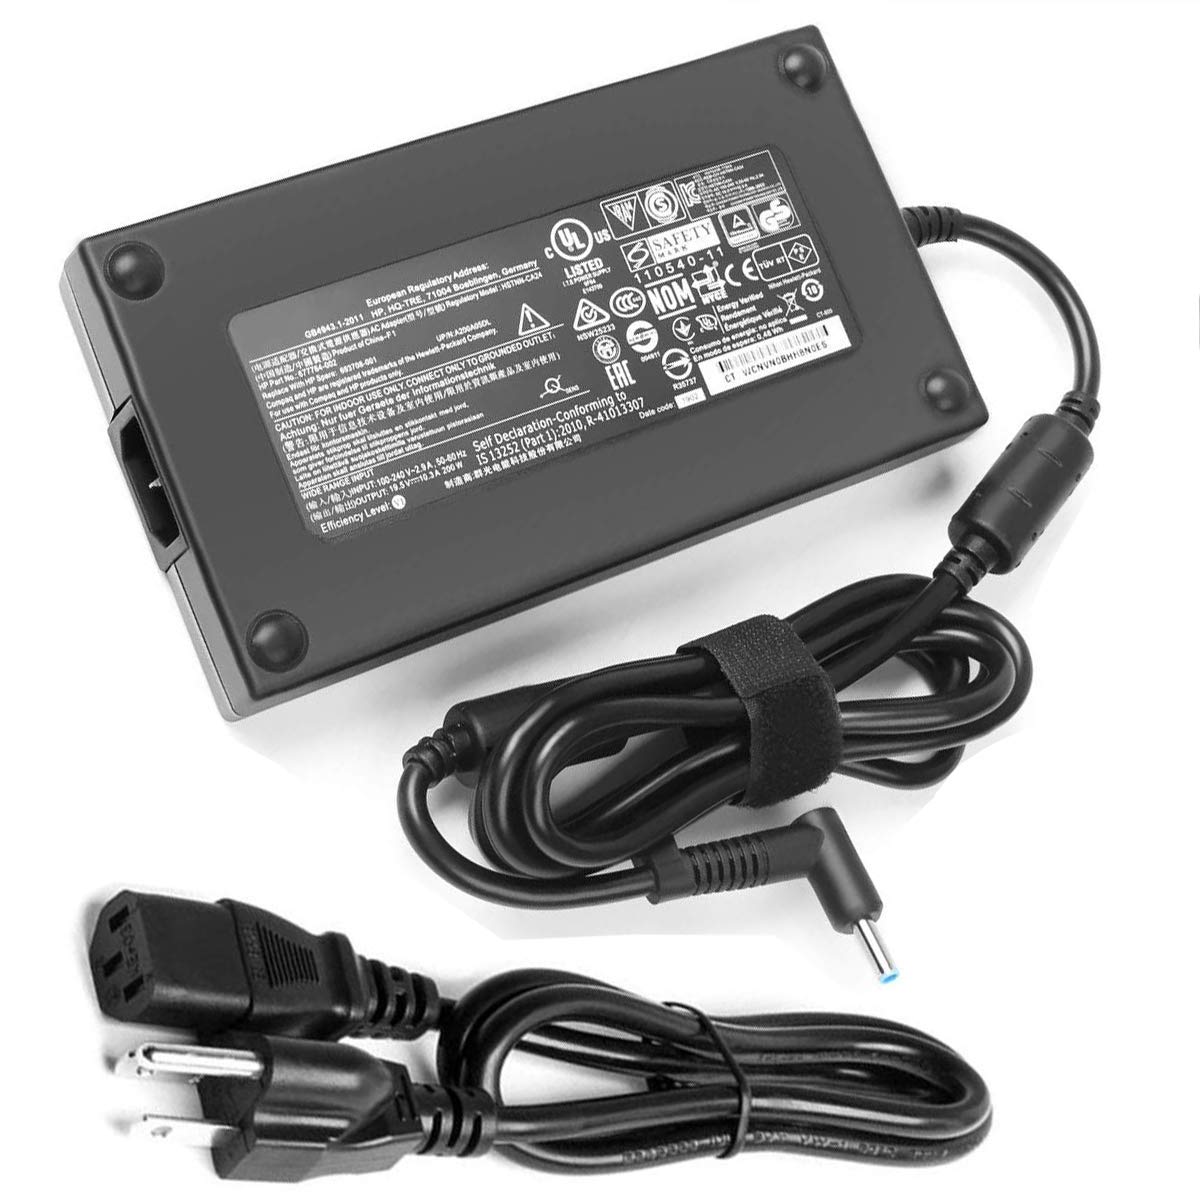 Mua 200W Laptop Charger Replacement for Hp-OMEN-ZBook-Pavilion-Gaming-Envy-Studio  G3 G4 G5 G6 G7 15 15t 17 17t Series, L00818-850 TPN-DA10 TPN-LA21  L73385-001 L00895-003 ADP-200HB B   Power Cord trên Amazon Mỹ  chính